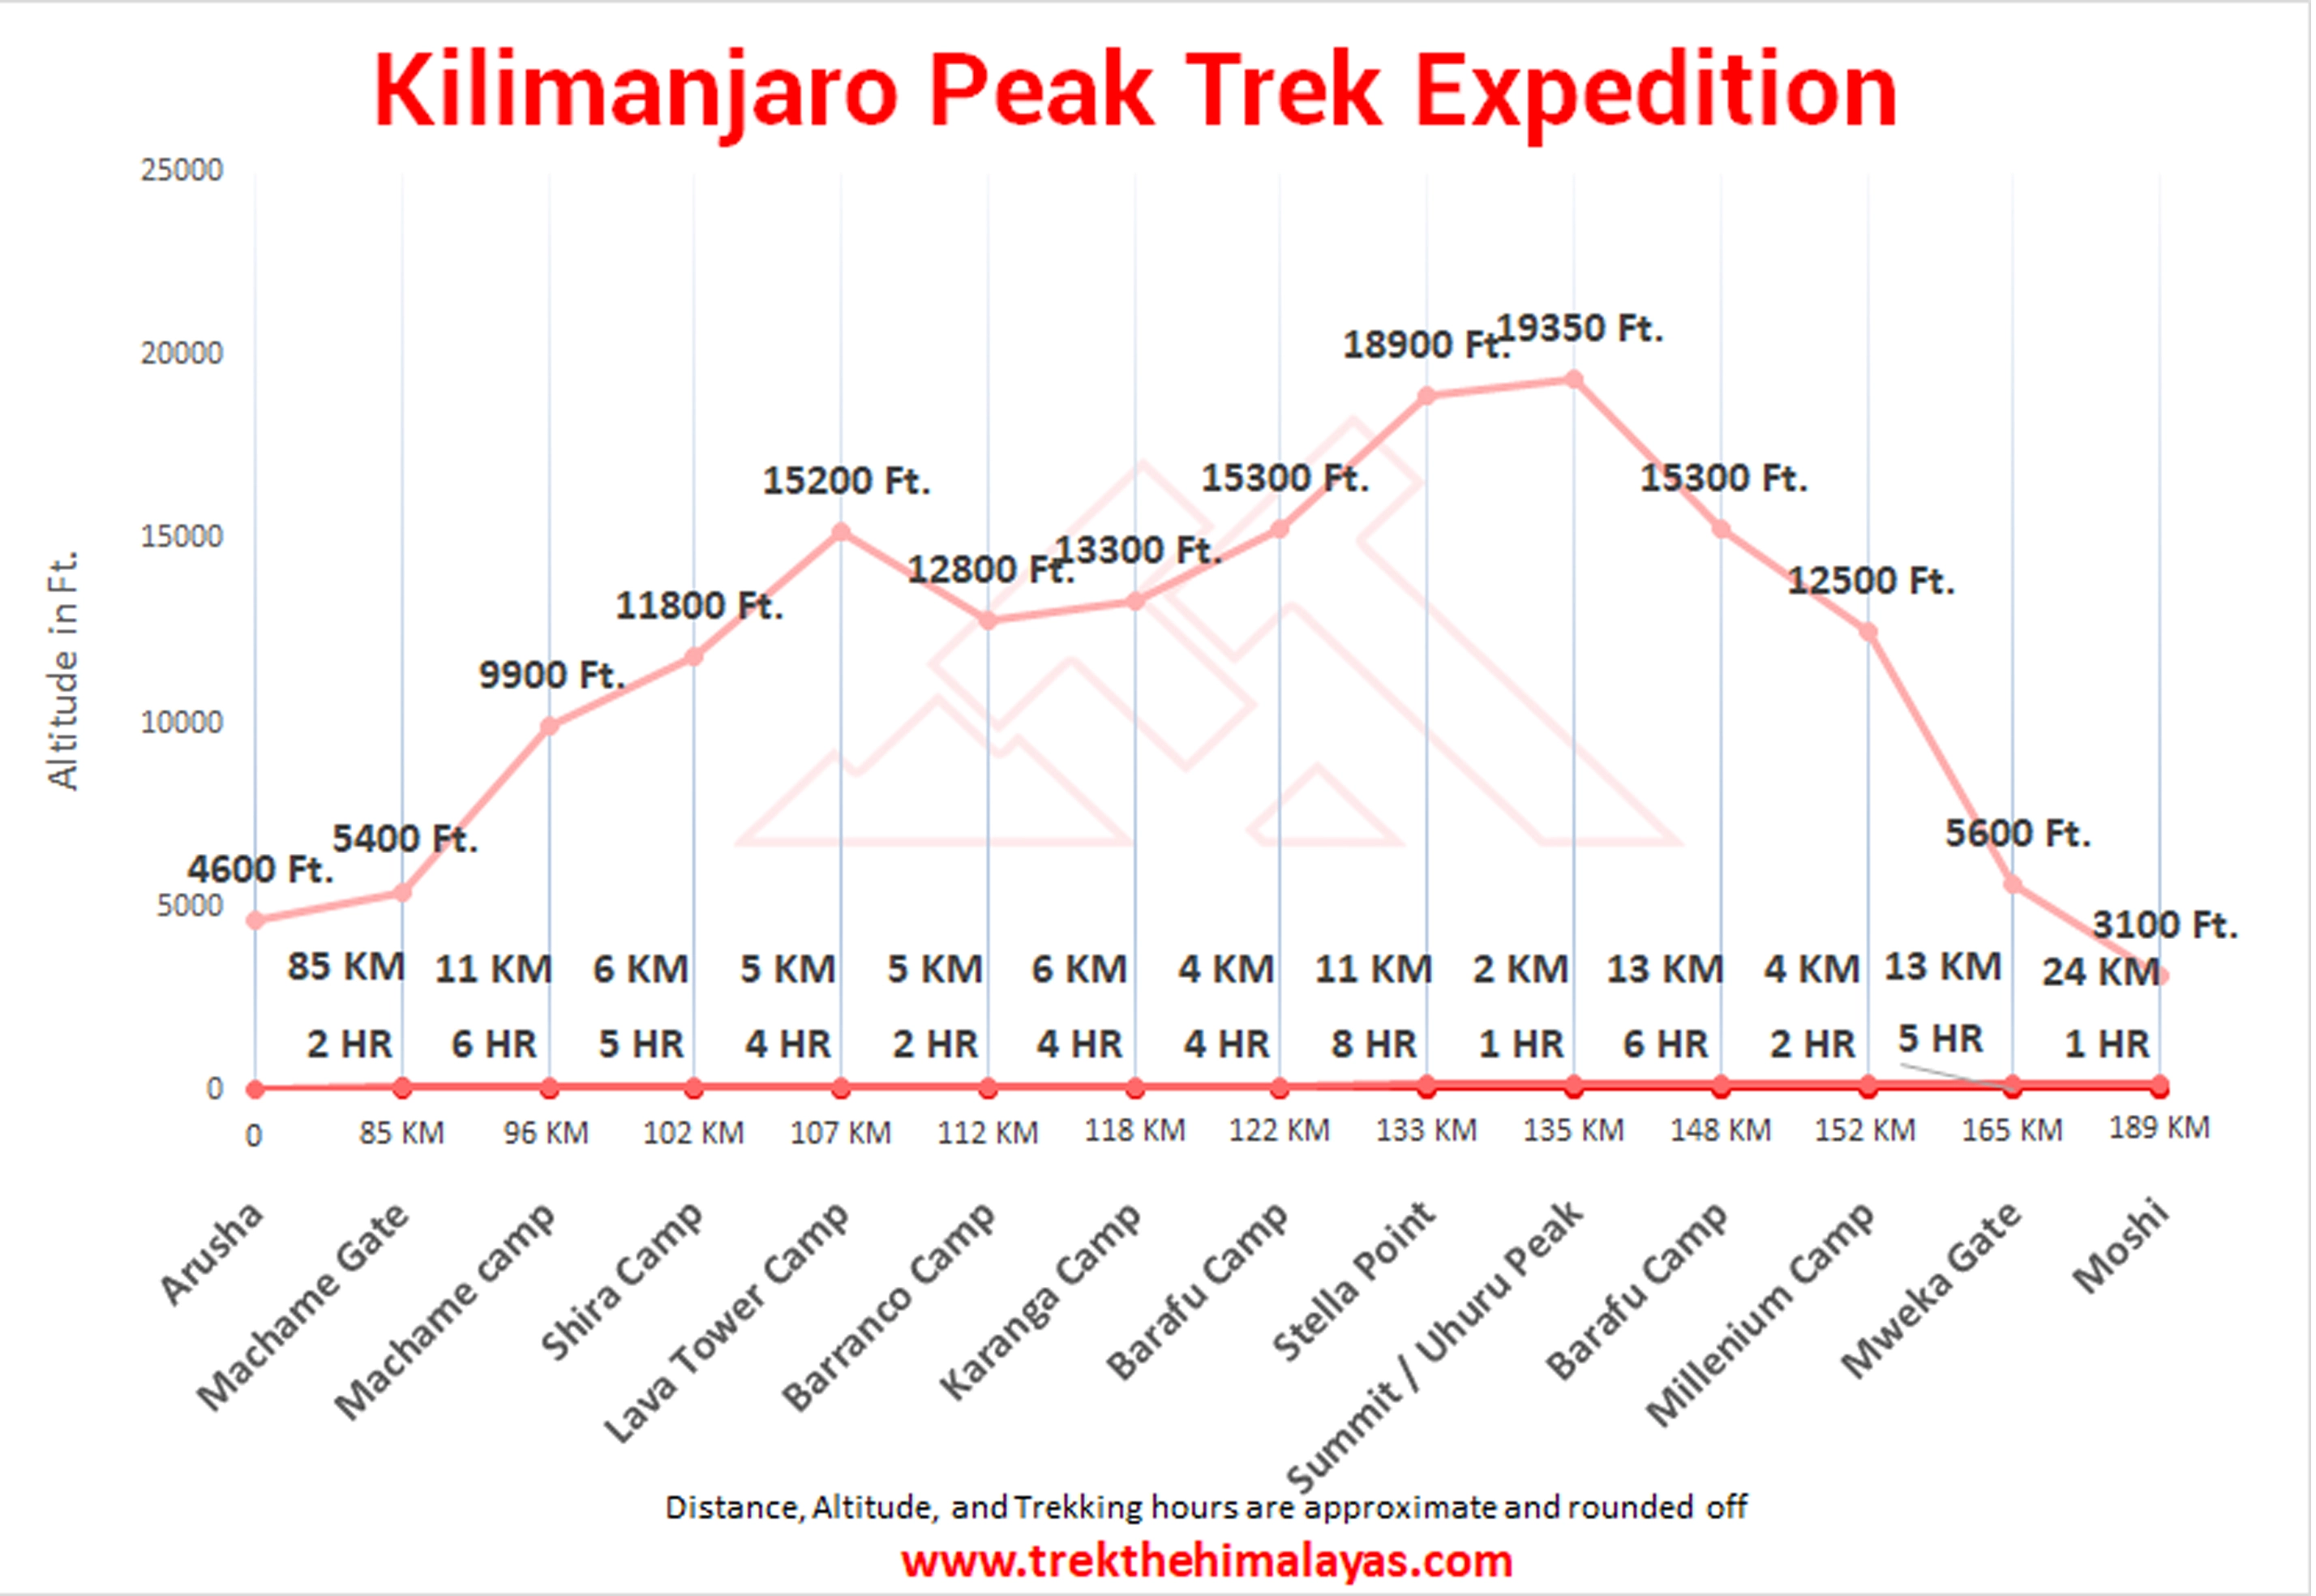 Kilimanjaro Peak Trek Expedition Maps